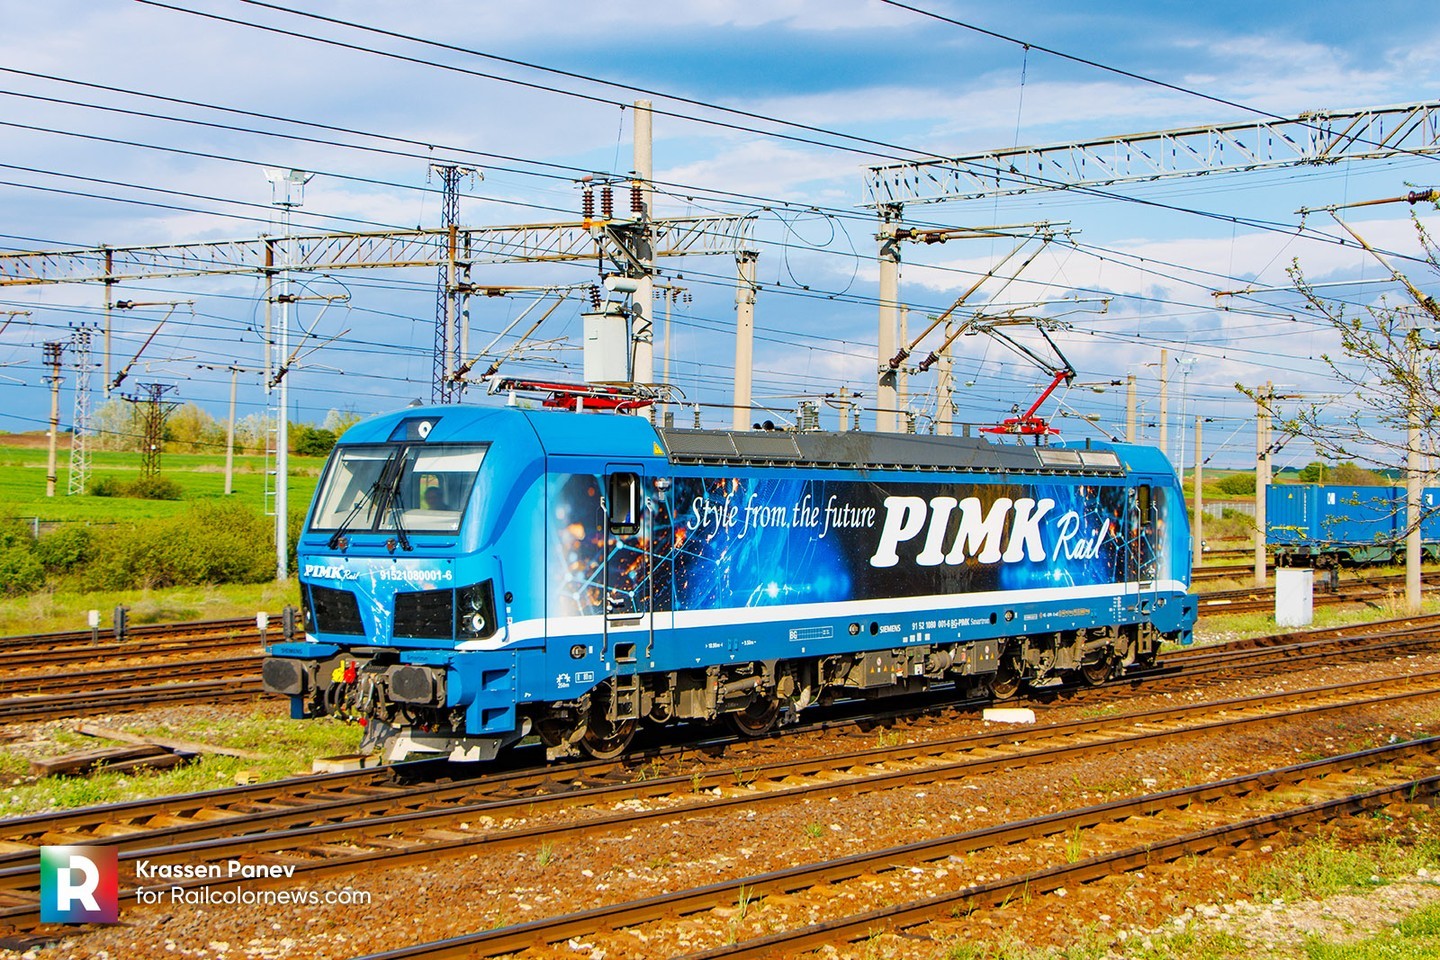 📸by Krassen Panev 🇧🇬 PIMK Rail’s Smartron 80 001 rides in ‘Style from the future’ ⬆️ More on RailcolorNews.com 📰
.
.
.
.
.
#siemens #siemenssmartron #smartron #PIMK #pimksmartron #Siemens_mobilty #railways #railways_of_europe #eisenbahnfotografie #railwayphotography #ellok #electriclocomotive #livery #creativity #влак #локомотив #80001 #locomotive #lokomotiva #Voluyak #Bulgaria #PIMKrail #stylefromthefuture